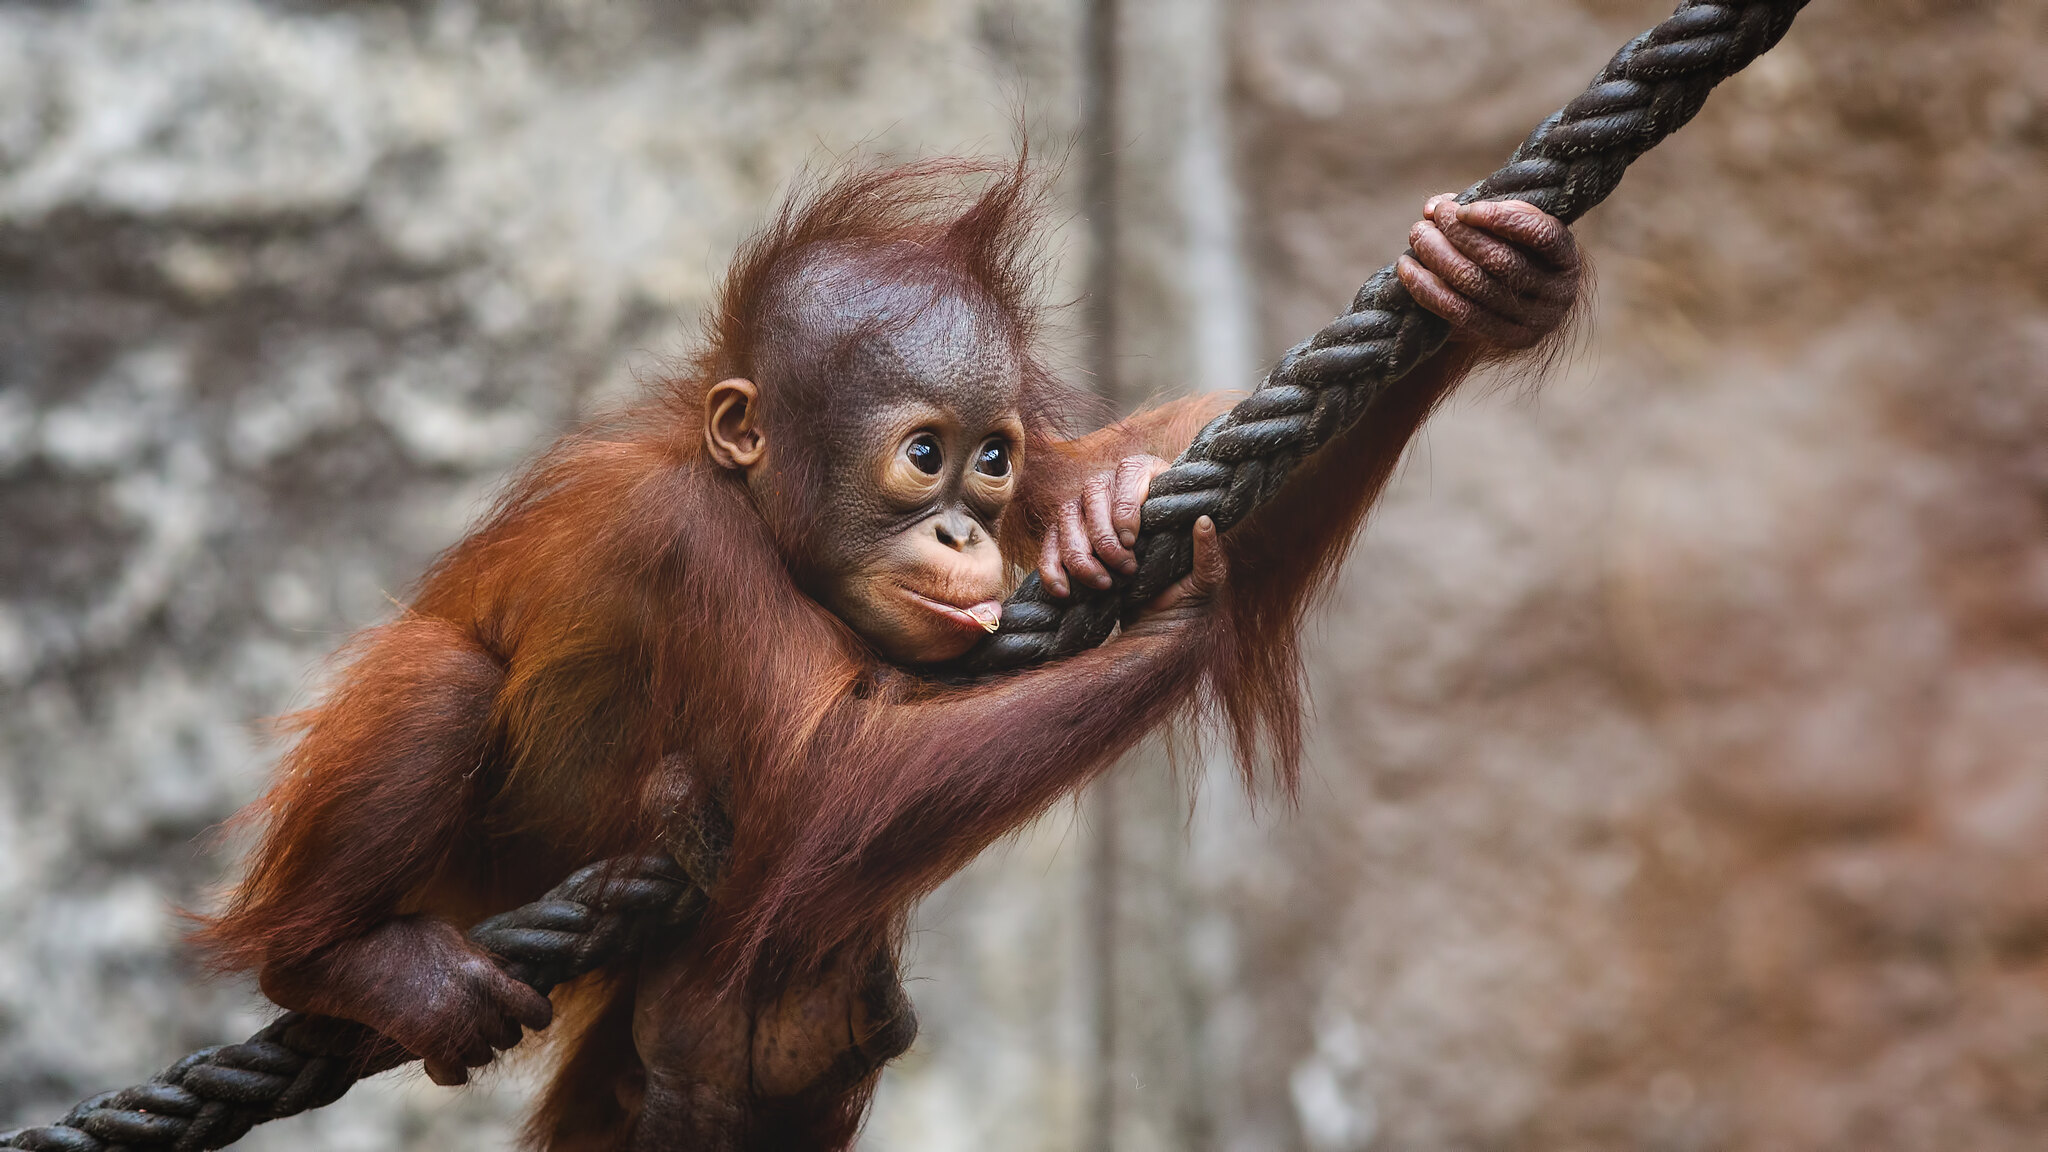 Cute baby orangutan holding onto a rop